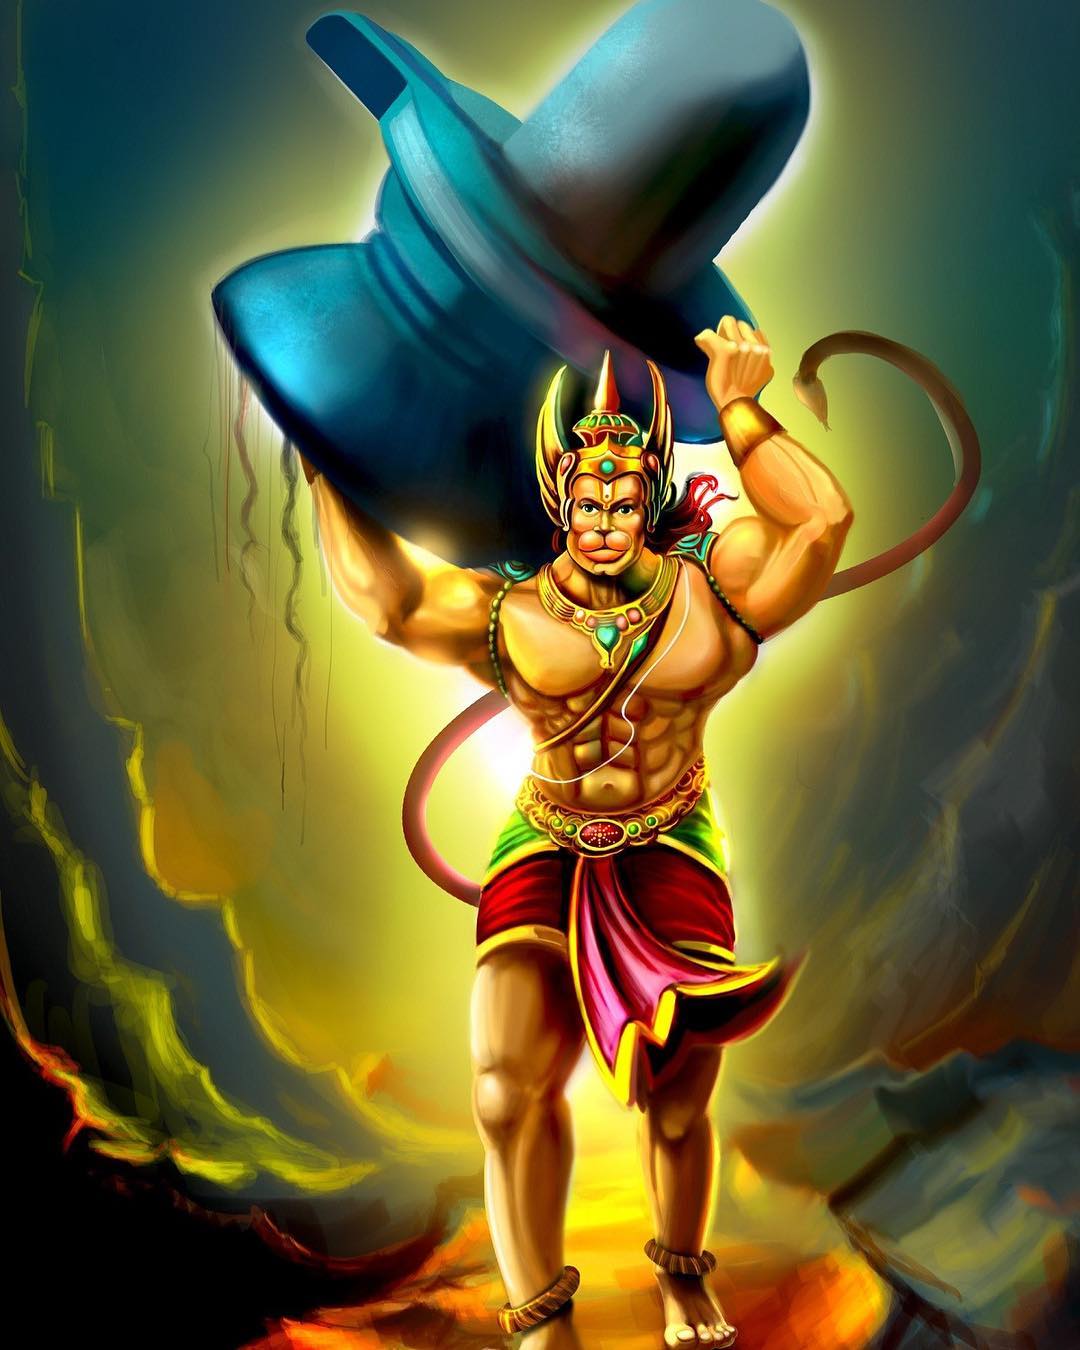 Wallpaper Hd Download For Android Mobile Hanuman